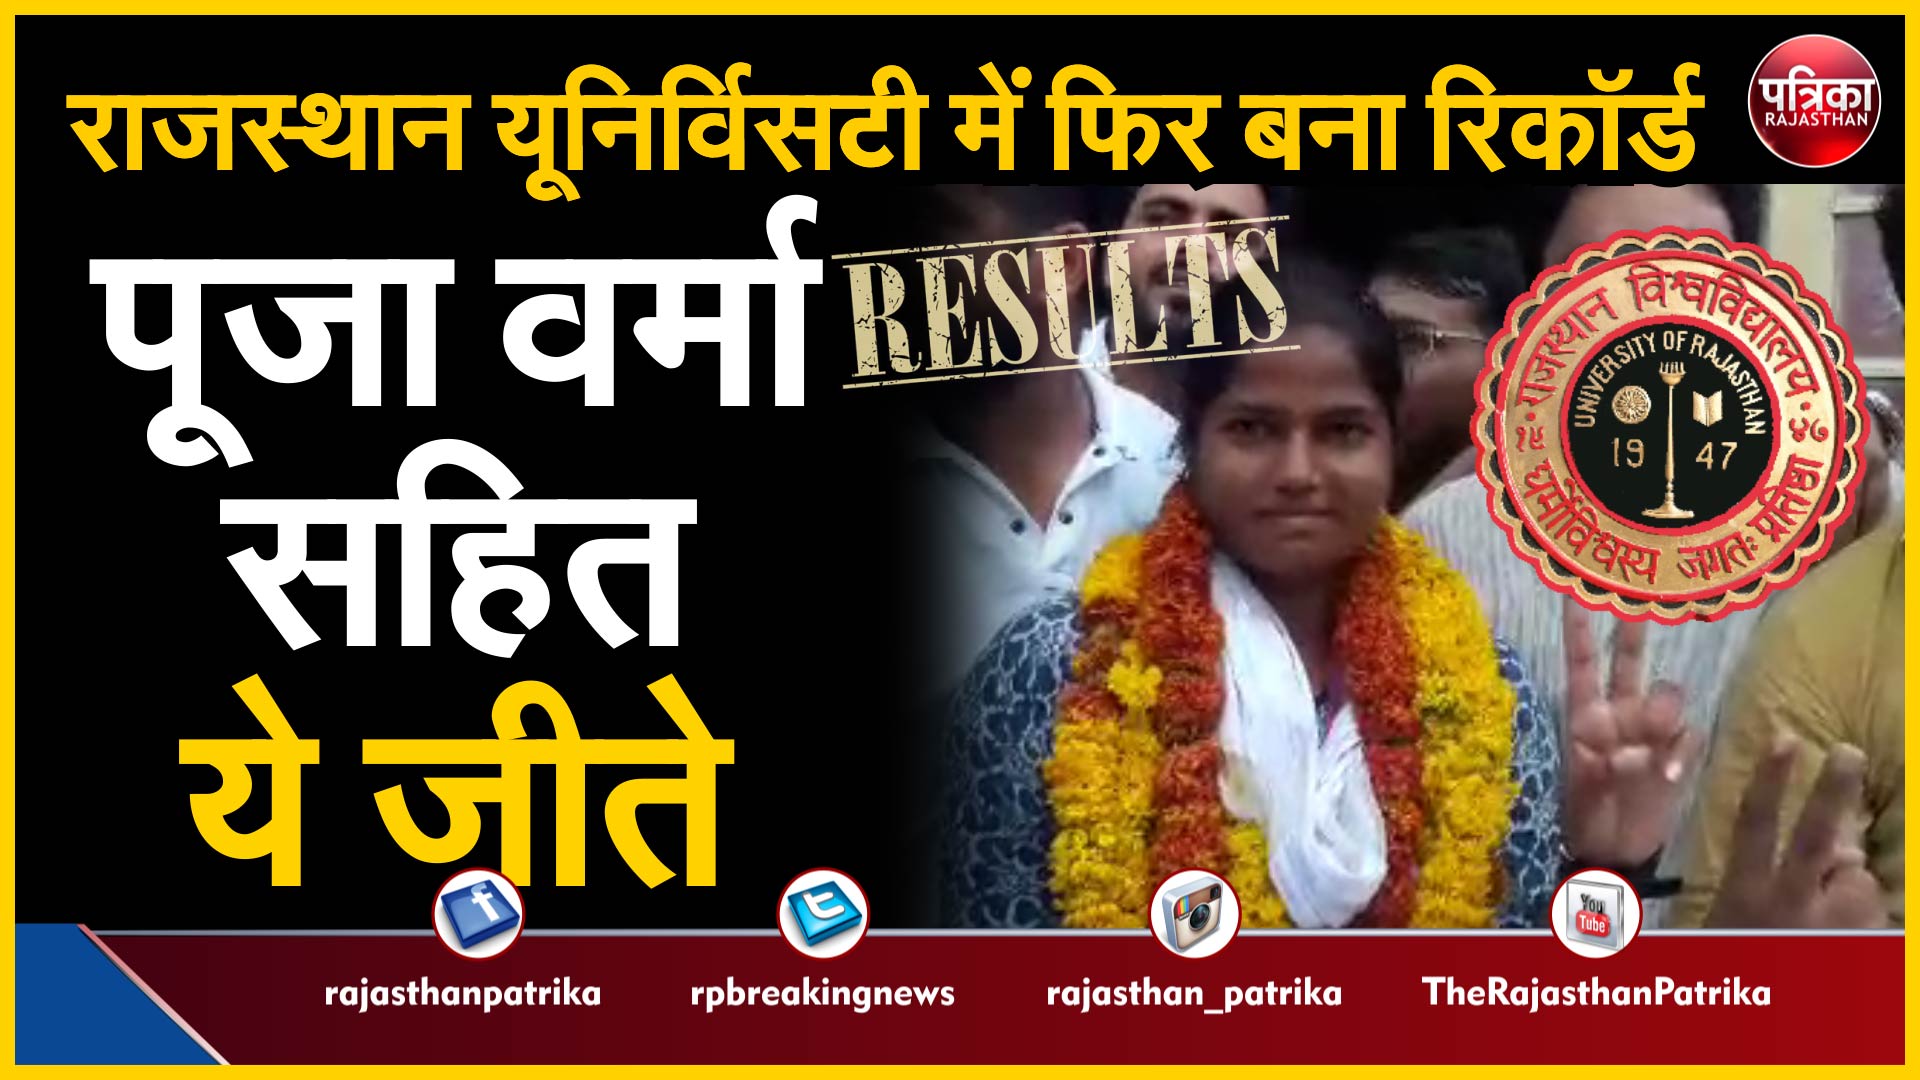 Rajasthan University Student Union Election 2019 : New Record Break